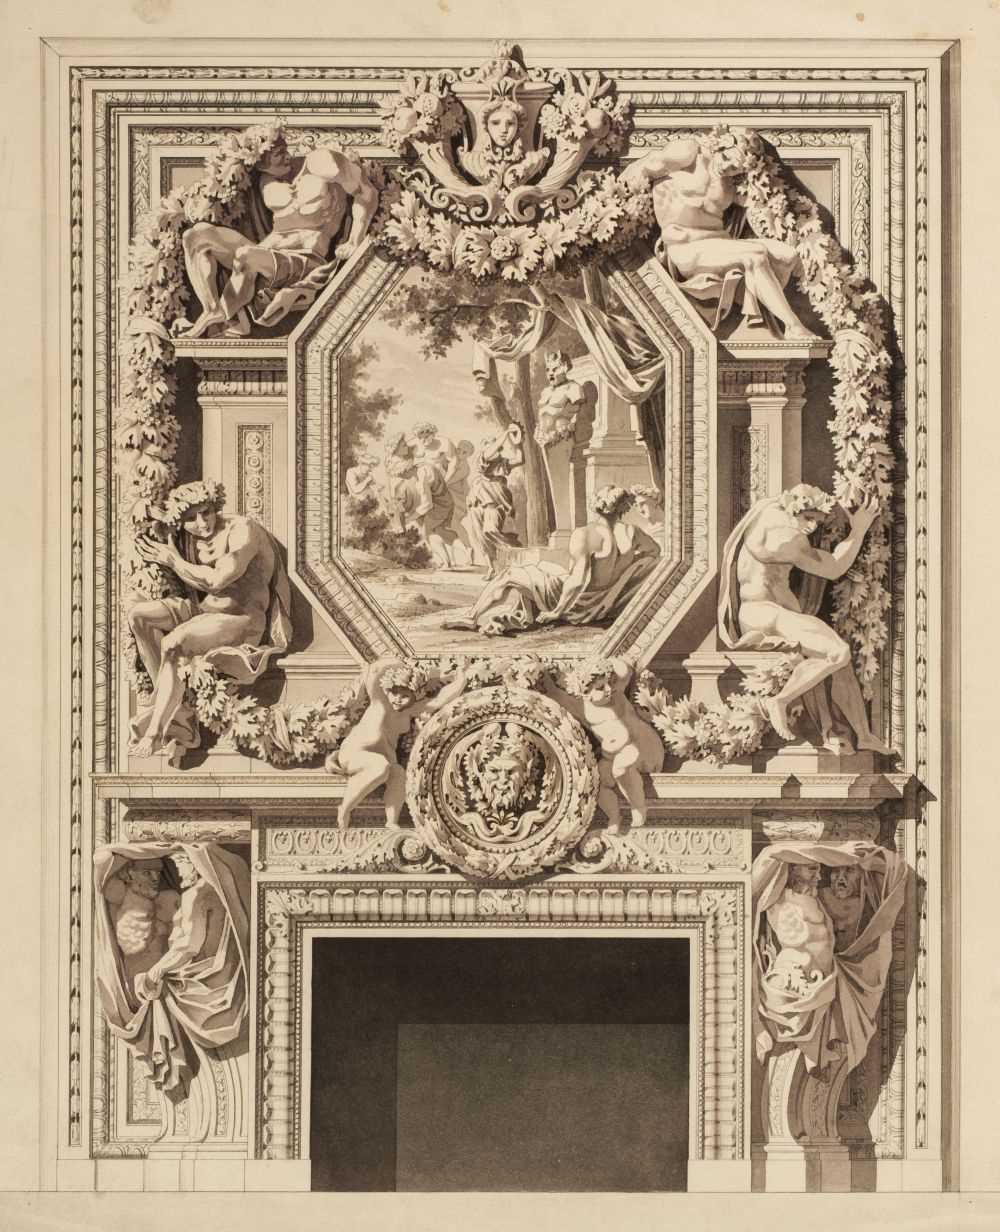 Lot 321 - Italian School. Design for a chimneypiece, circa 1820